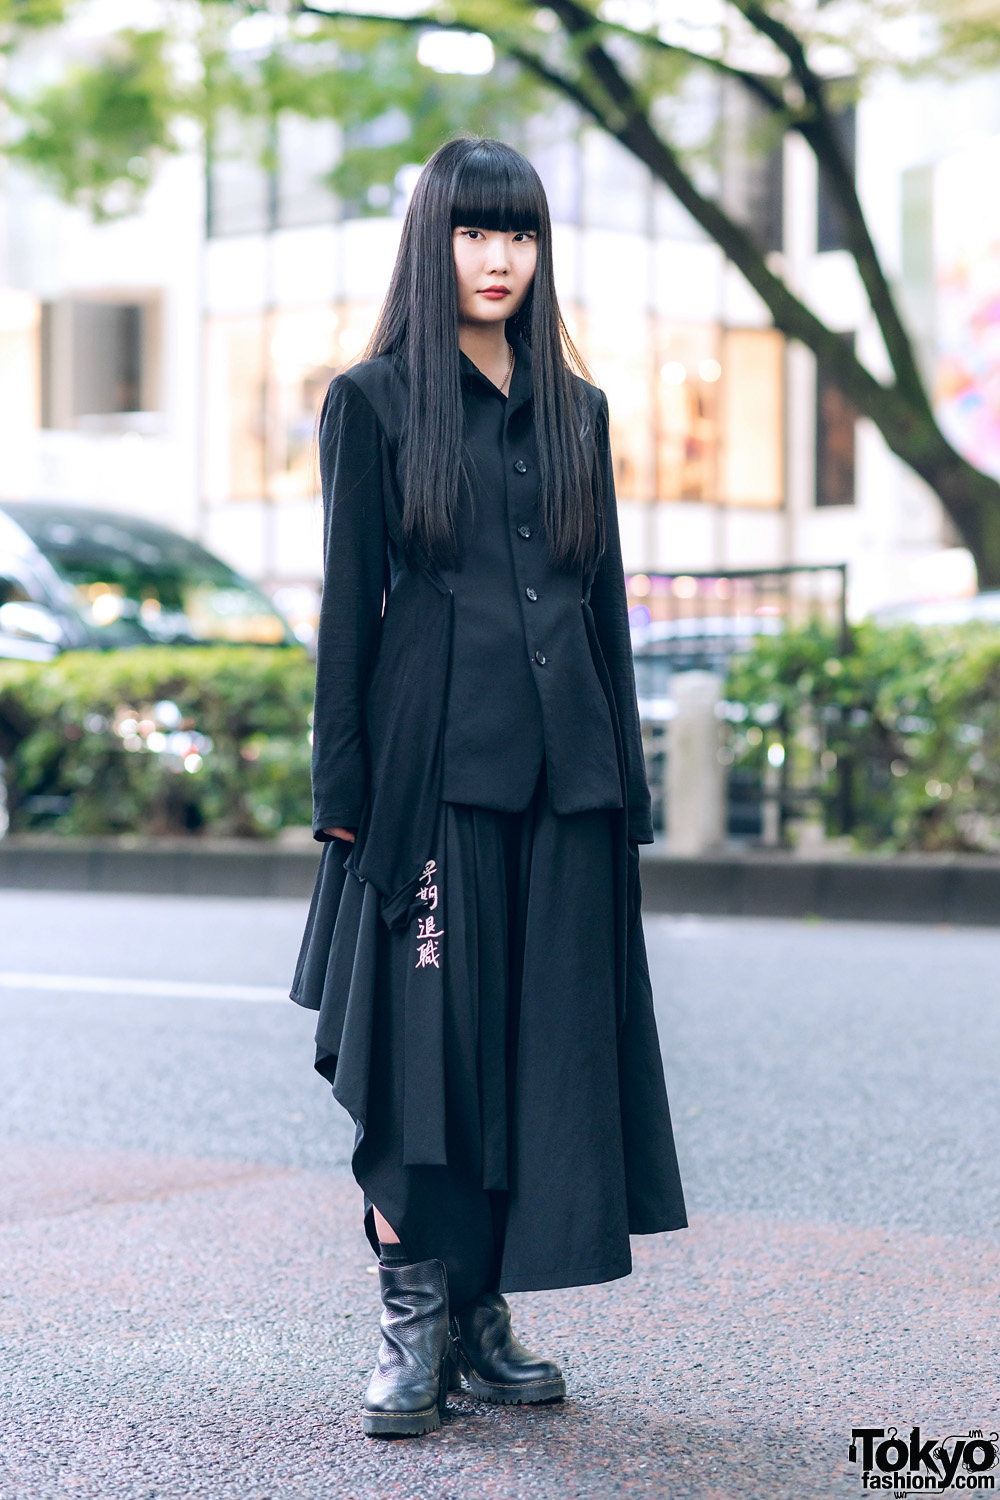 Yohji Yamamoto Minimalist Monochrome Street Style in Tokyo w/ Draped Jacket, Asymmetrical Skirt & Dr. Martens